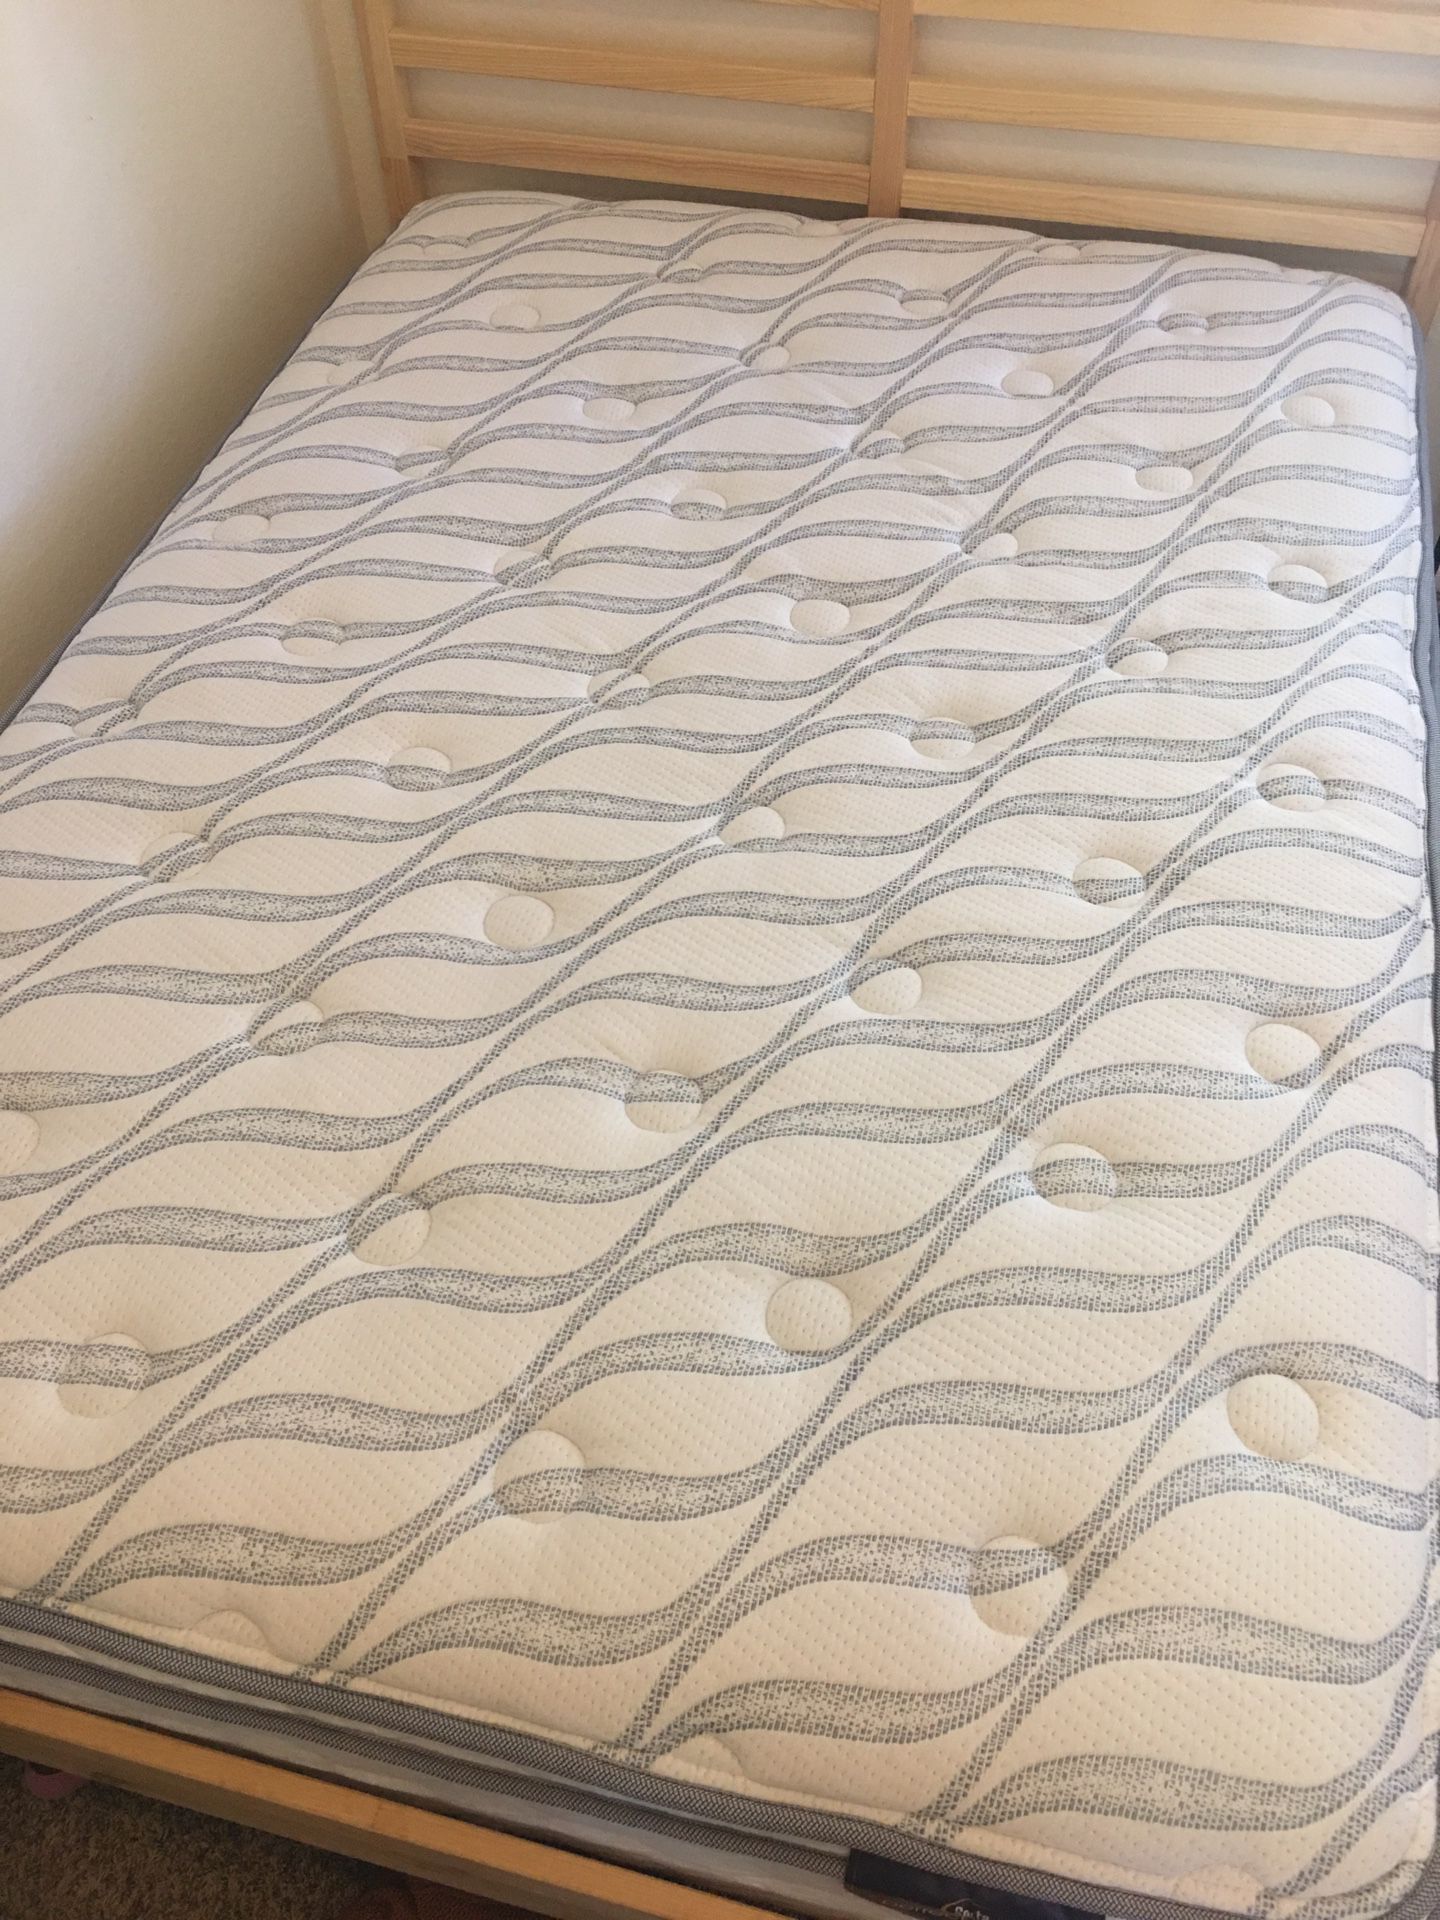 Practically NEW full size Serta mattress only no box spring Menifee